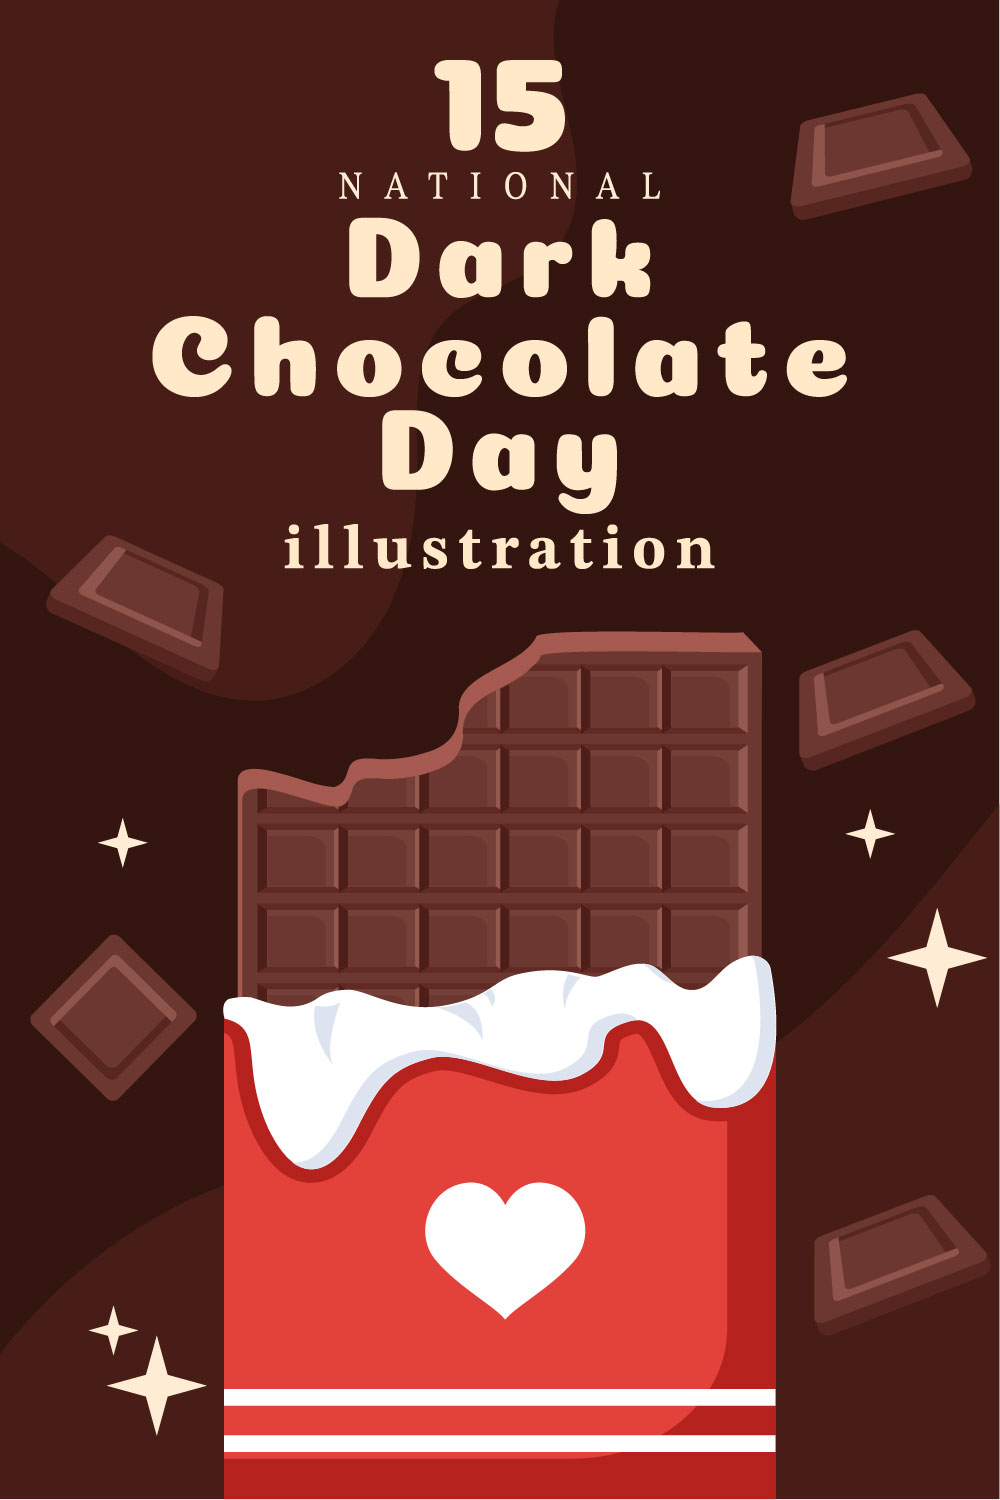 World Dark Chocolate Day Illustration pinterest image.